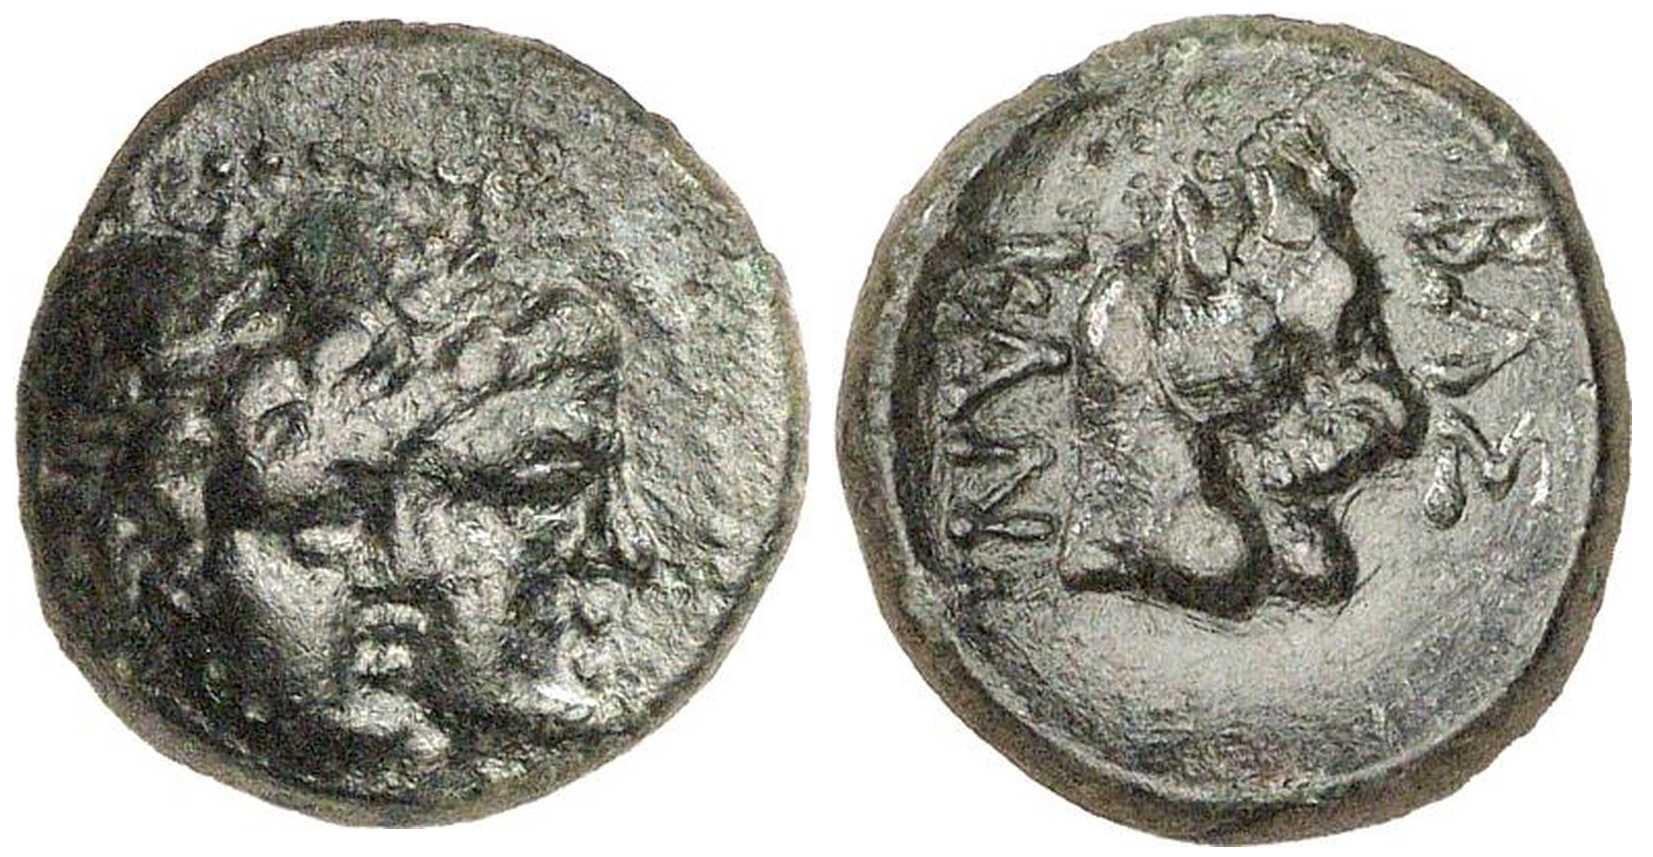 3296 Canites Rex Scythicus Thraciae AE